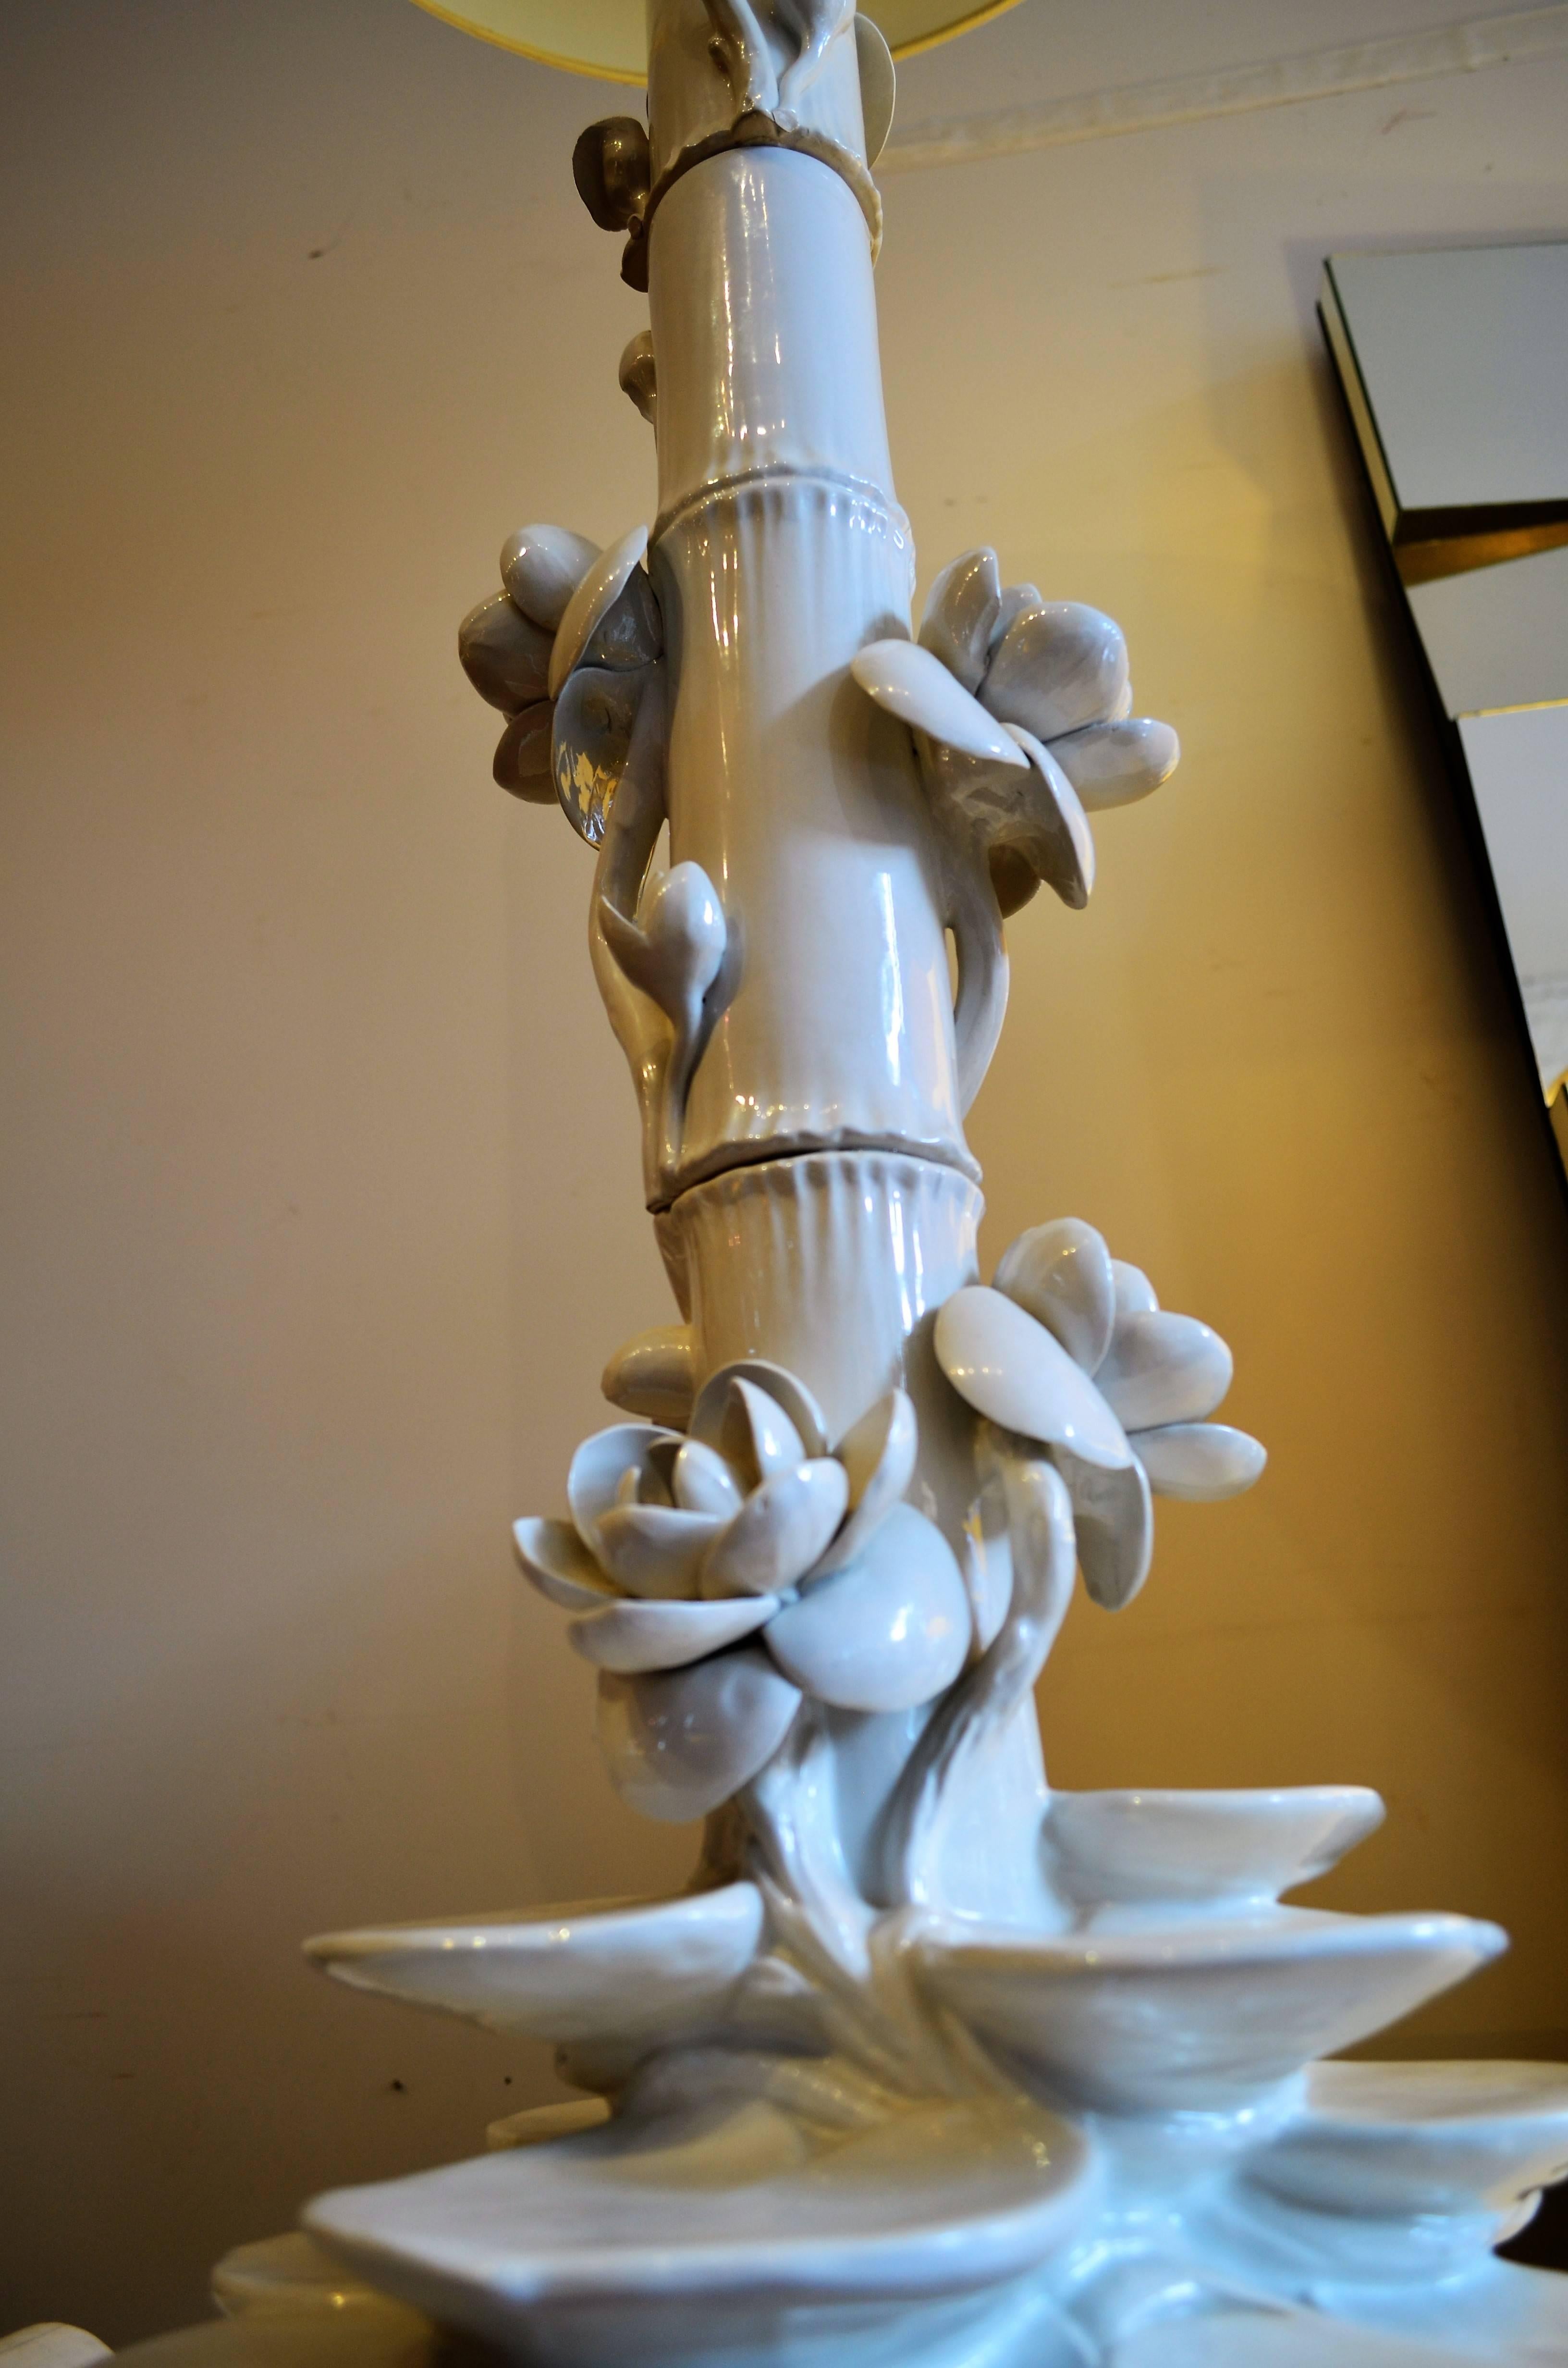 Italian ceramic lotus and bamboo floor lamp.
Fantastic Hollywood Regency profile. Shade not included.